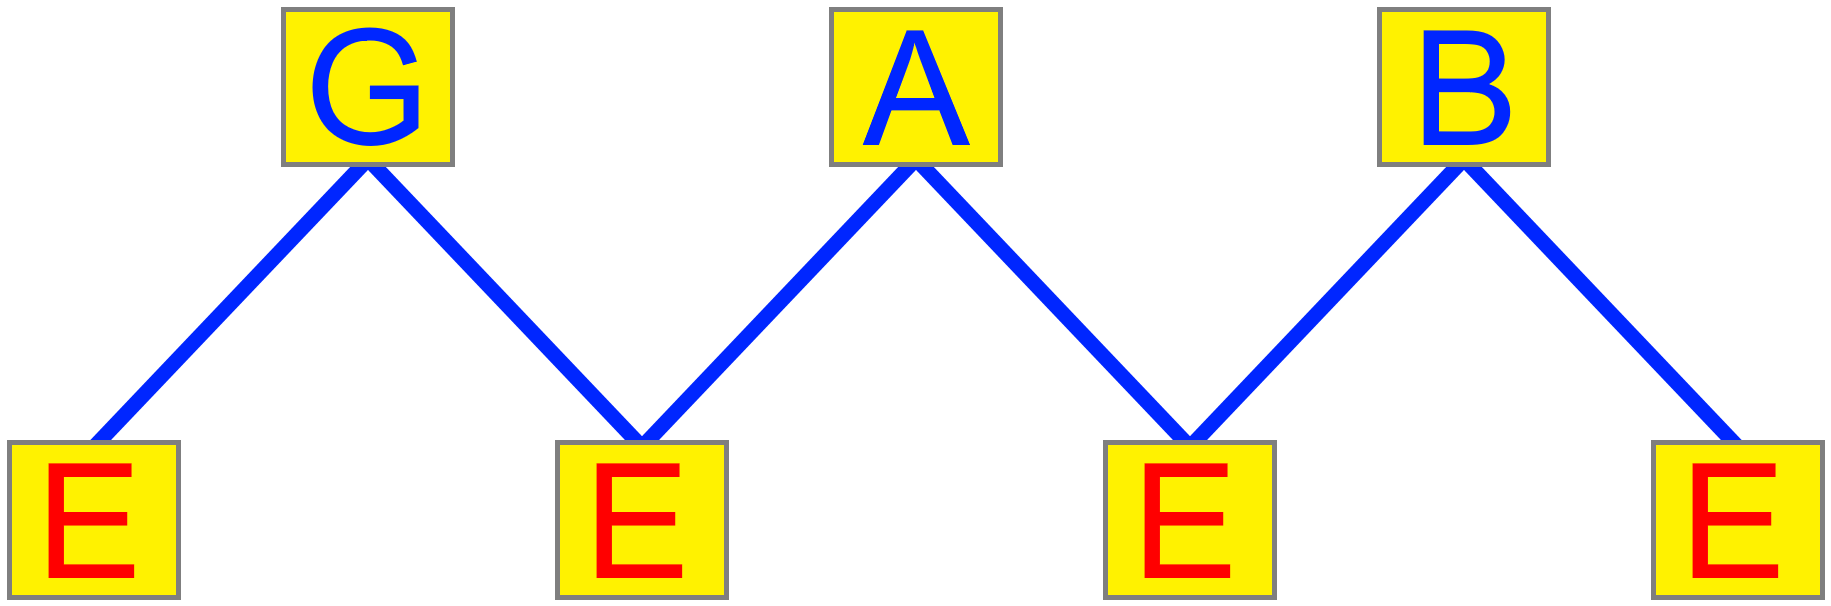 E pedal point diagram